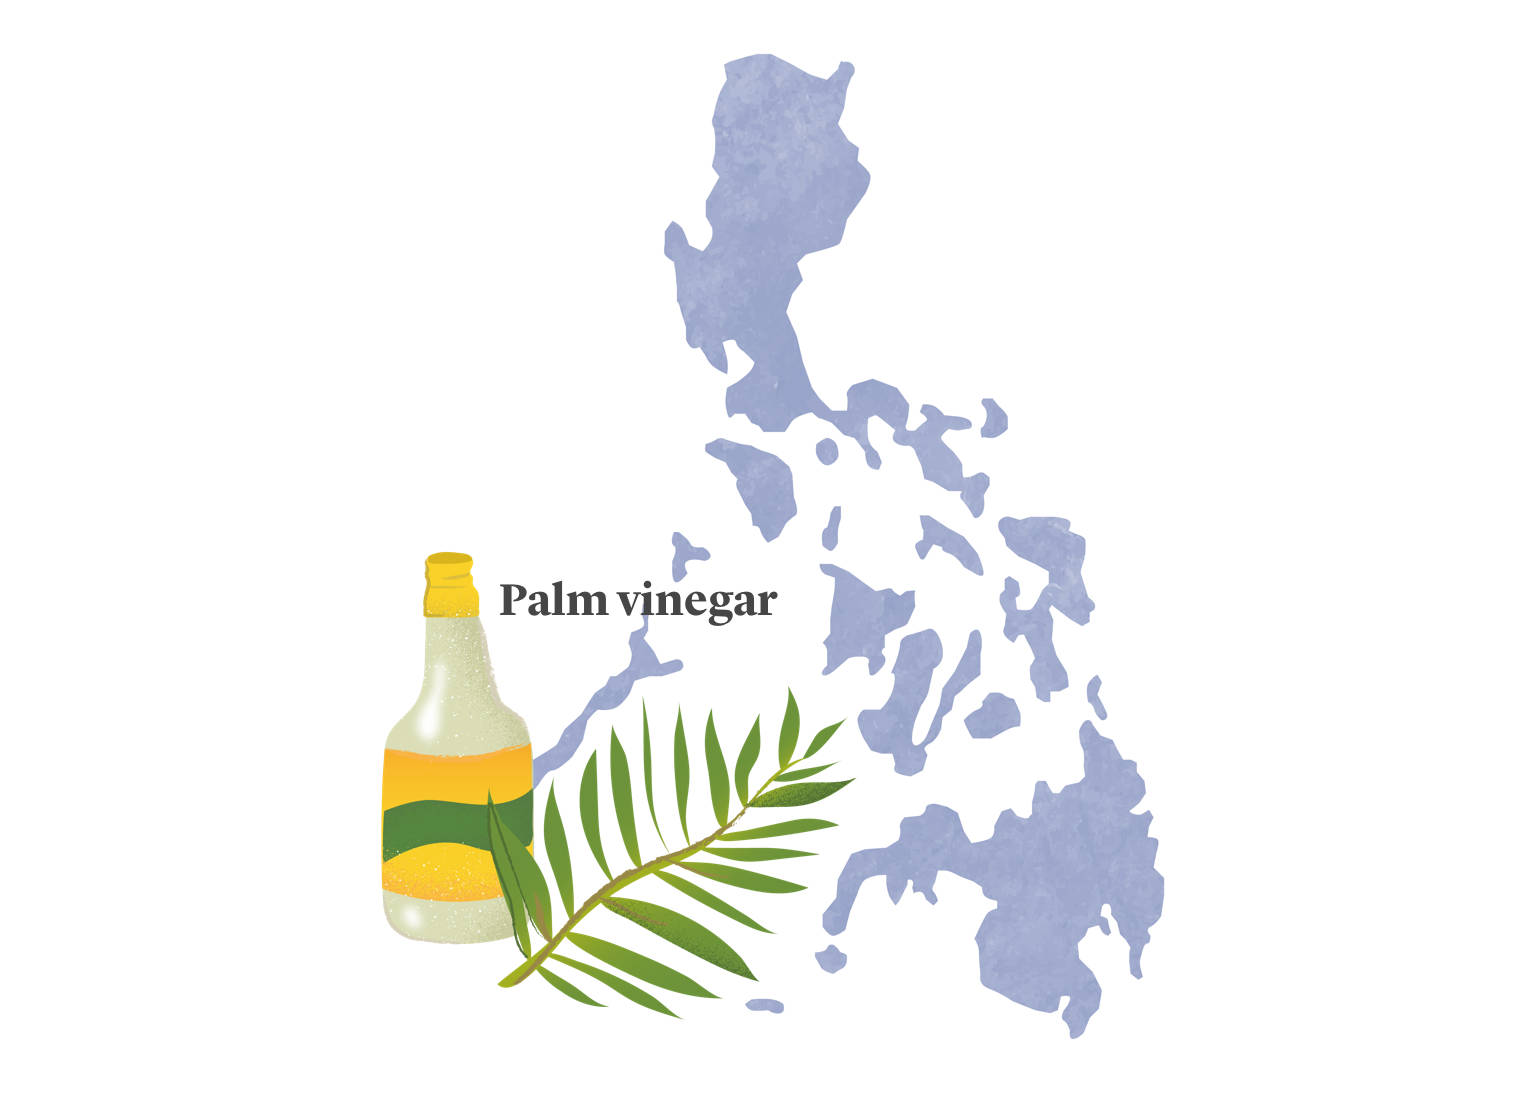 Asian Spices Philippines Palm Vinegar Background